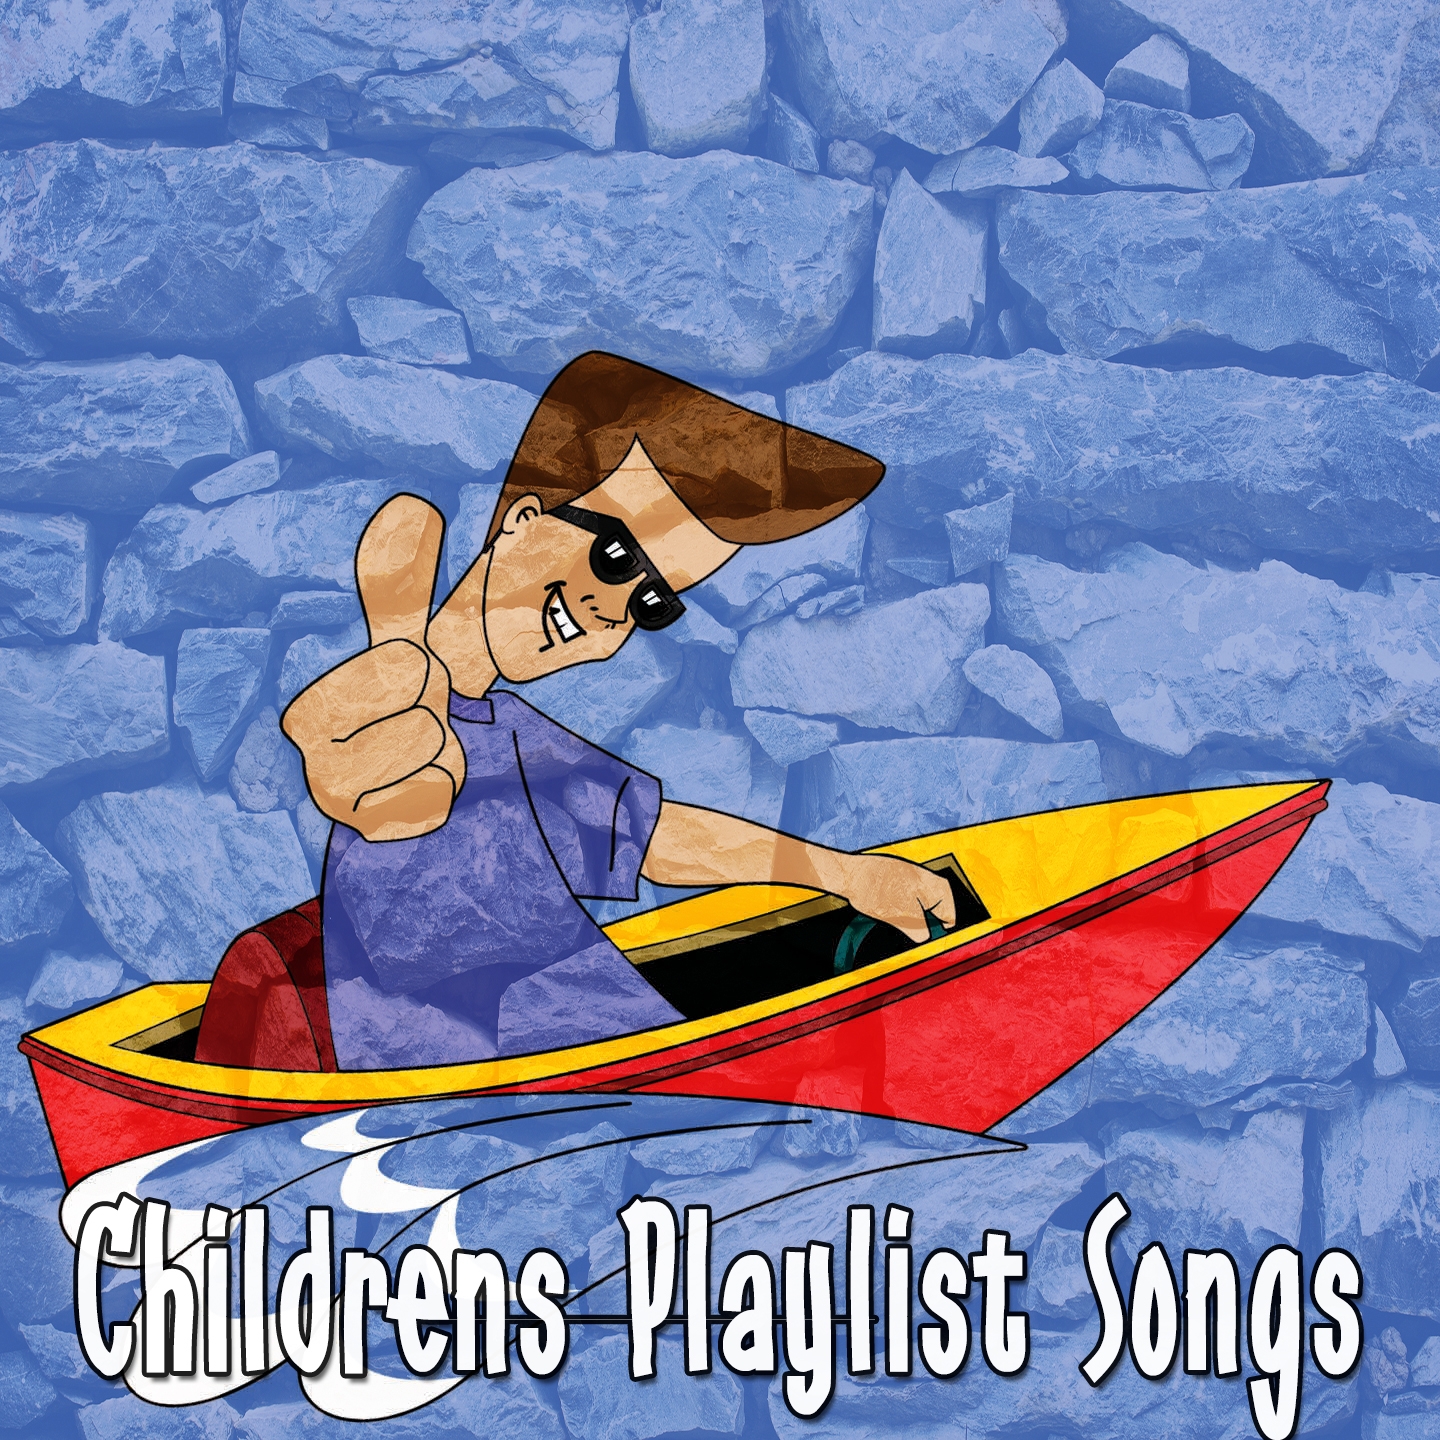 Childrens Playlist Songs